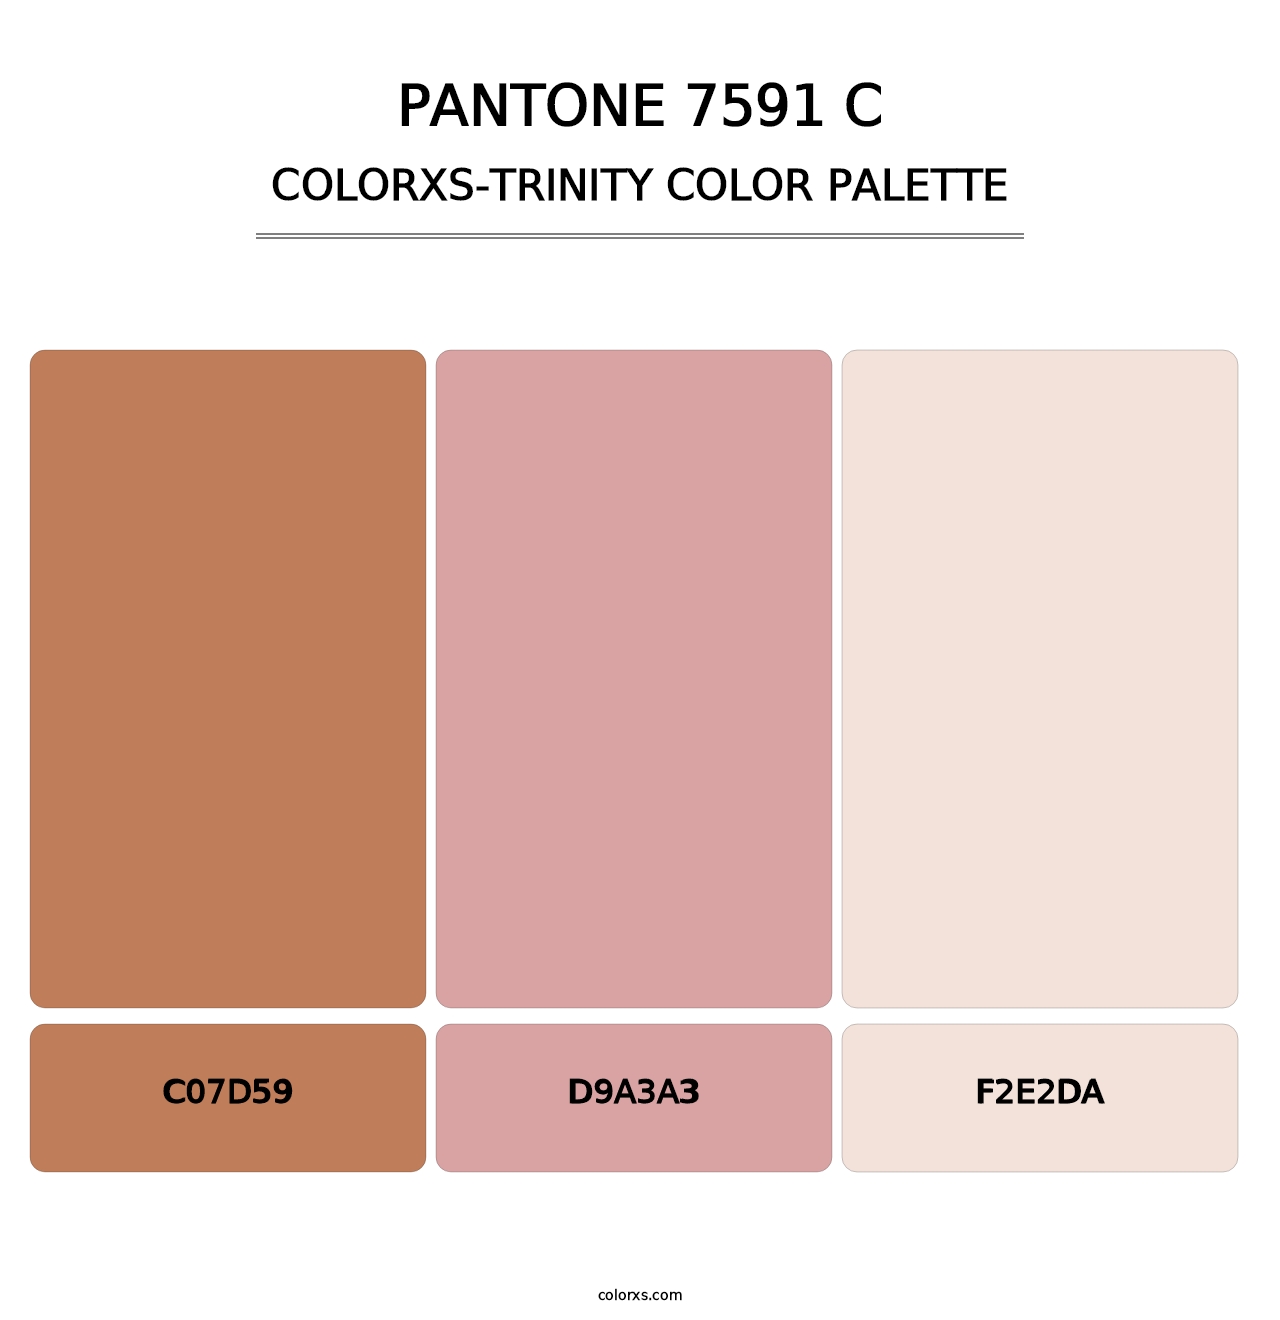 PANTONE 7591 C - Colorxs Trinity Palette